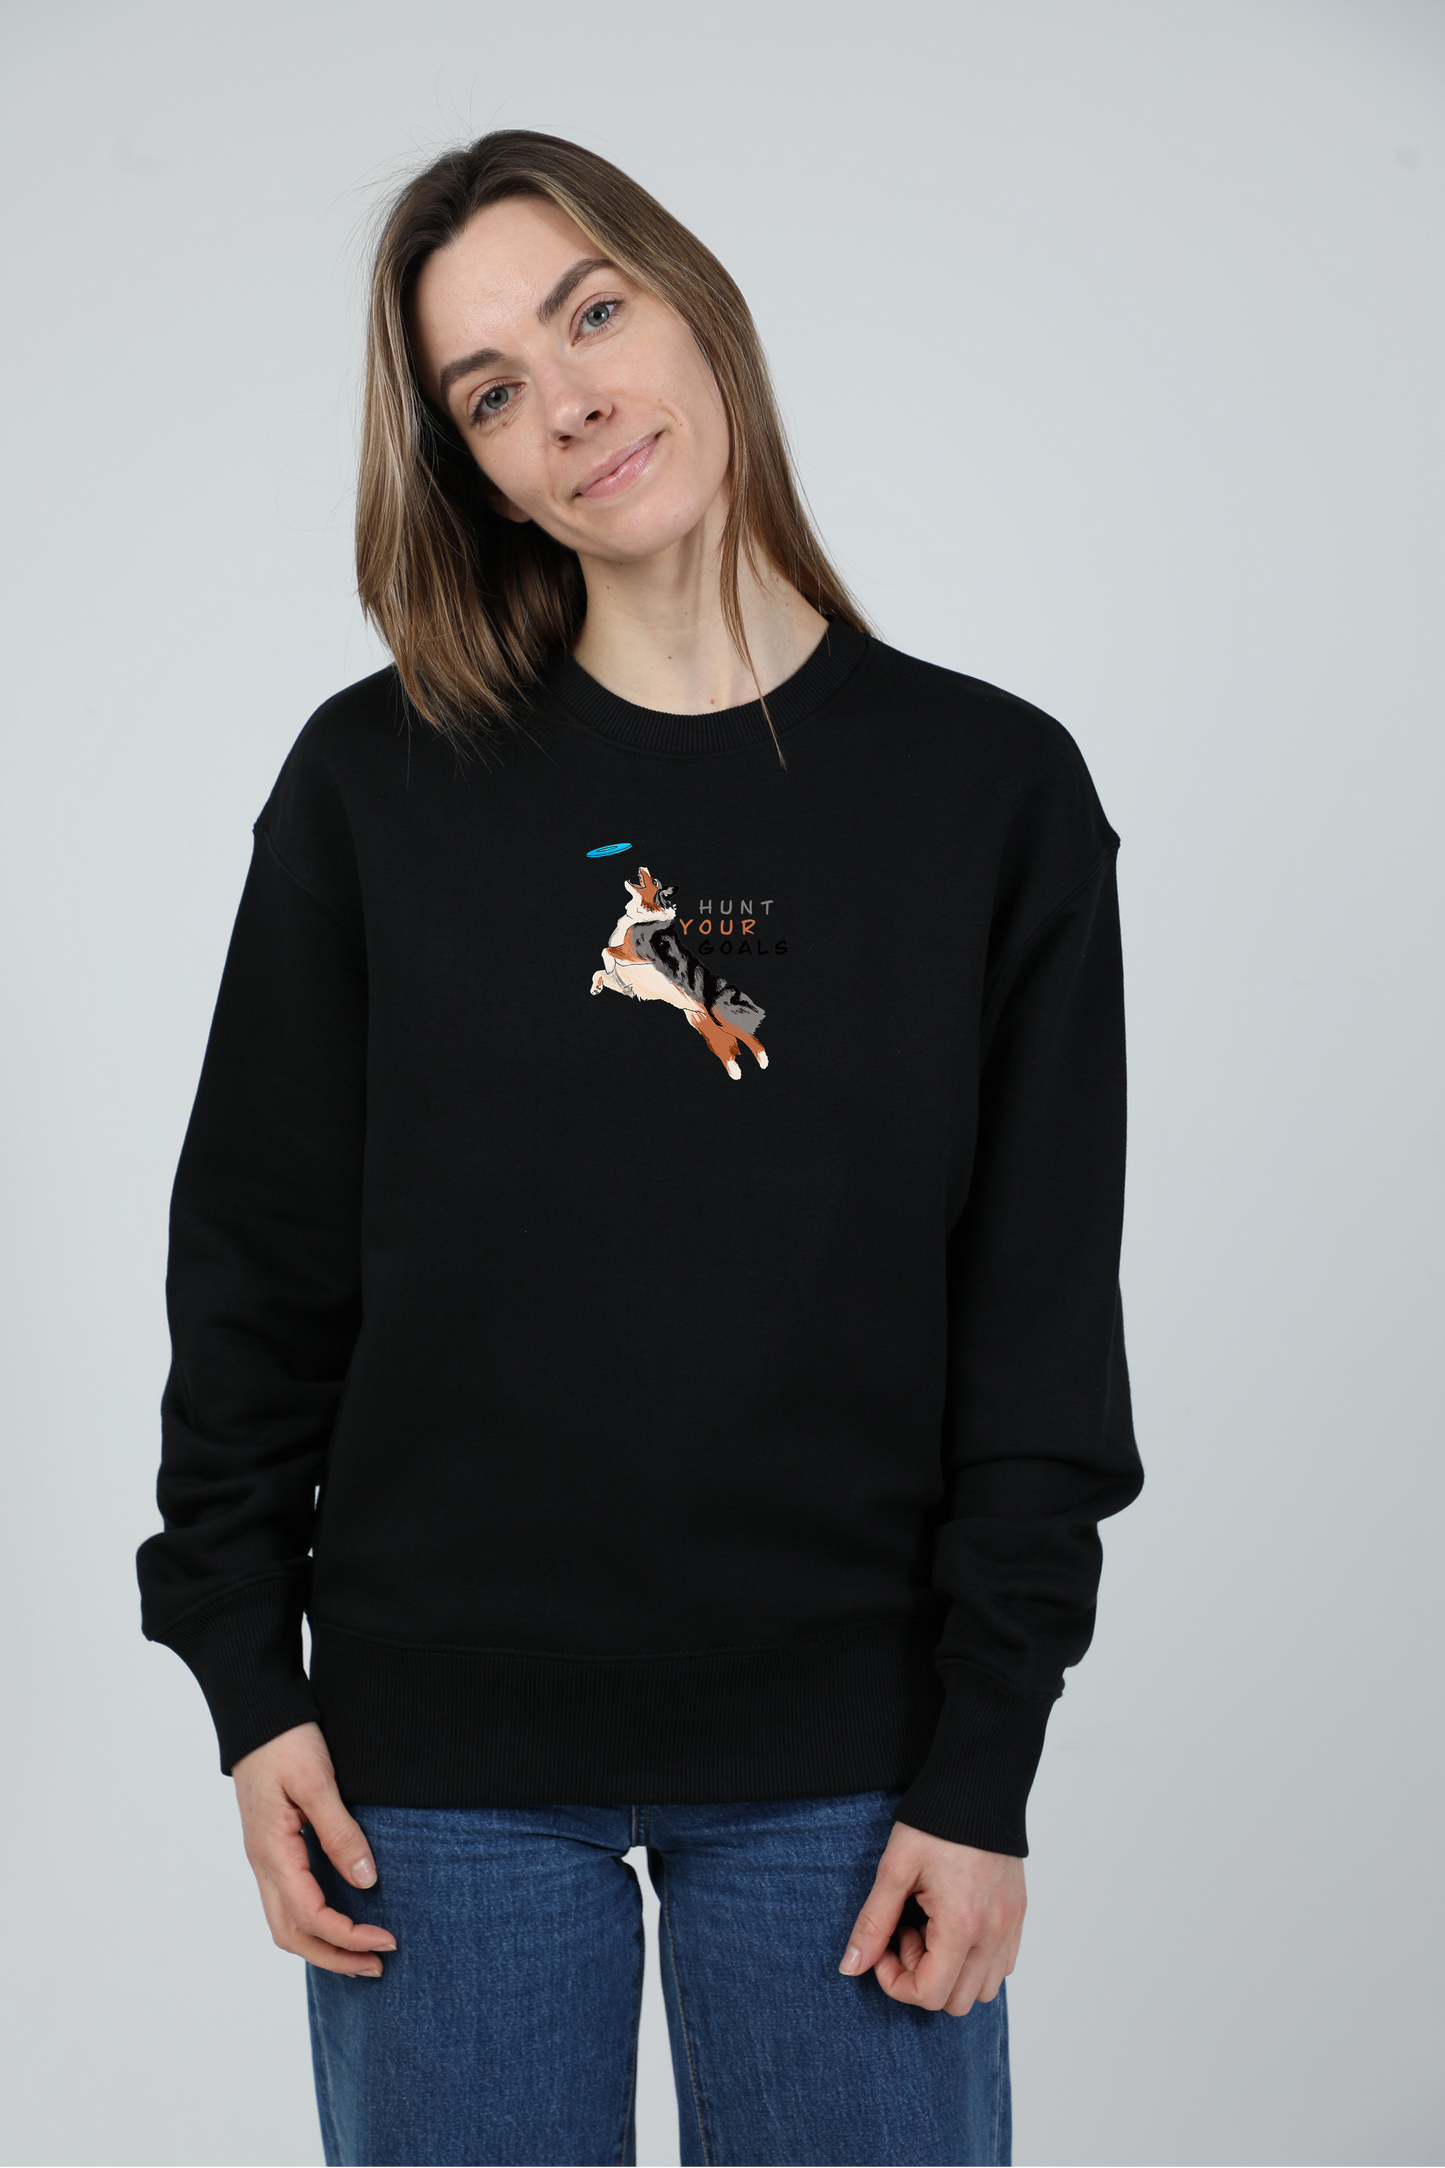 Hunt your goals | Crew neck sweatshirt with dog. Oversize fit | Unisex